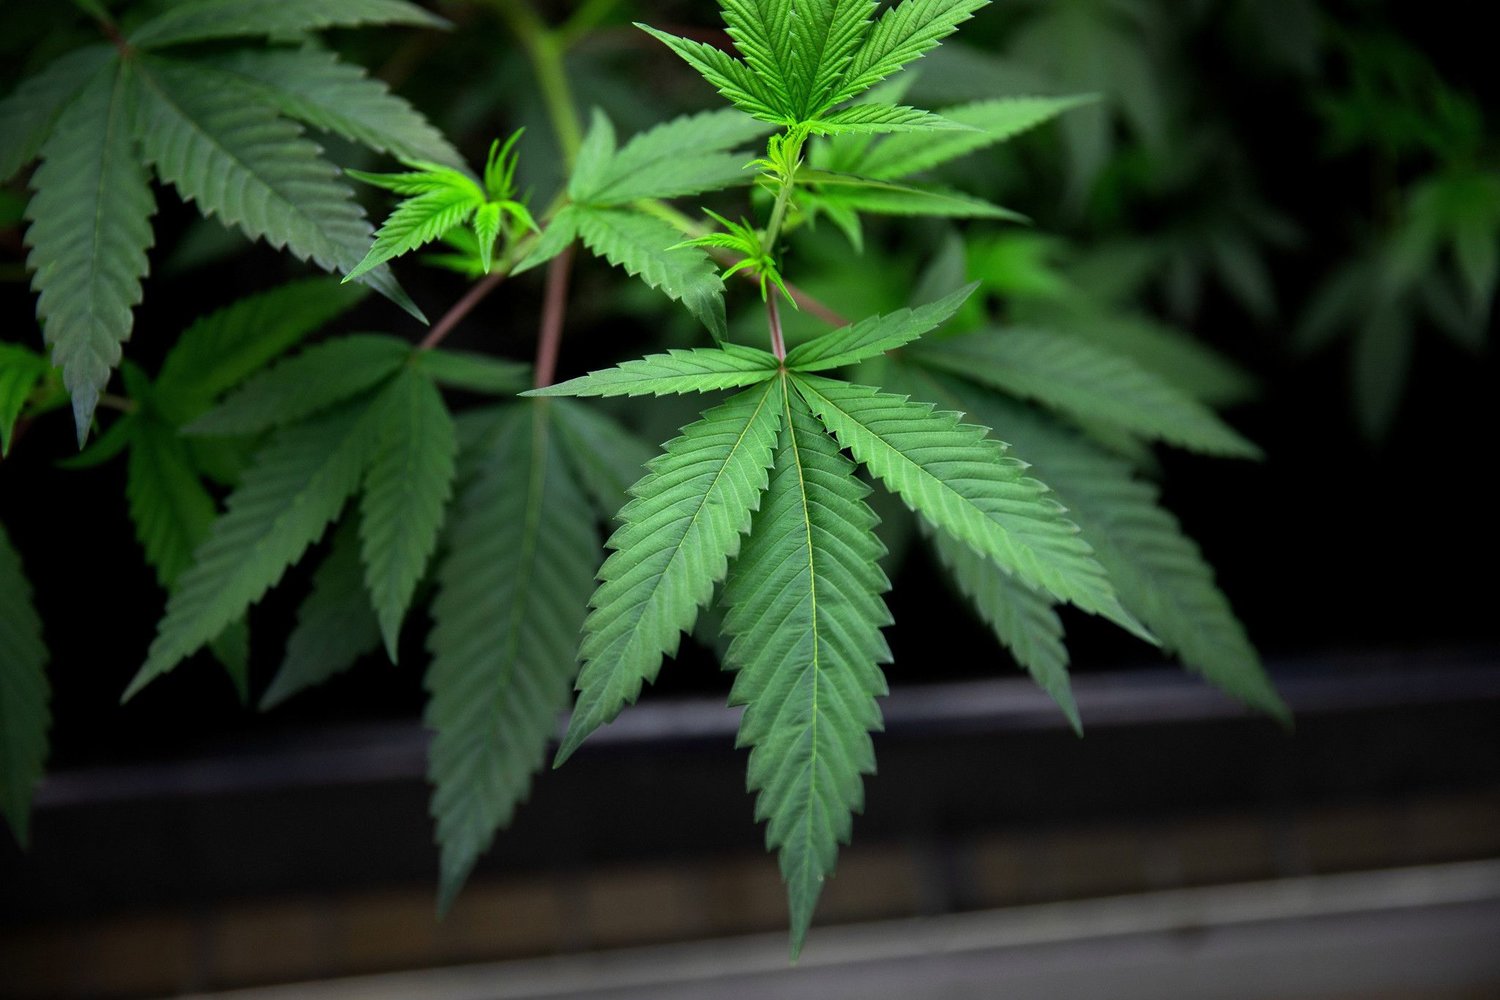 Marijuana plants grow under lights at a medical marijuana cultivation facility Aug. 8, 2018, in Joliet, Illinois. Illinois is one of 37 states to make medicinal marijuana legal. (Erin Hooley/Chicago Tribune/TNS)